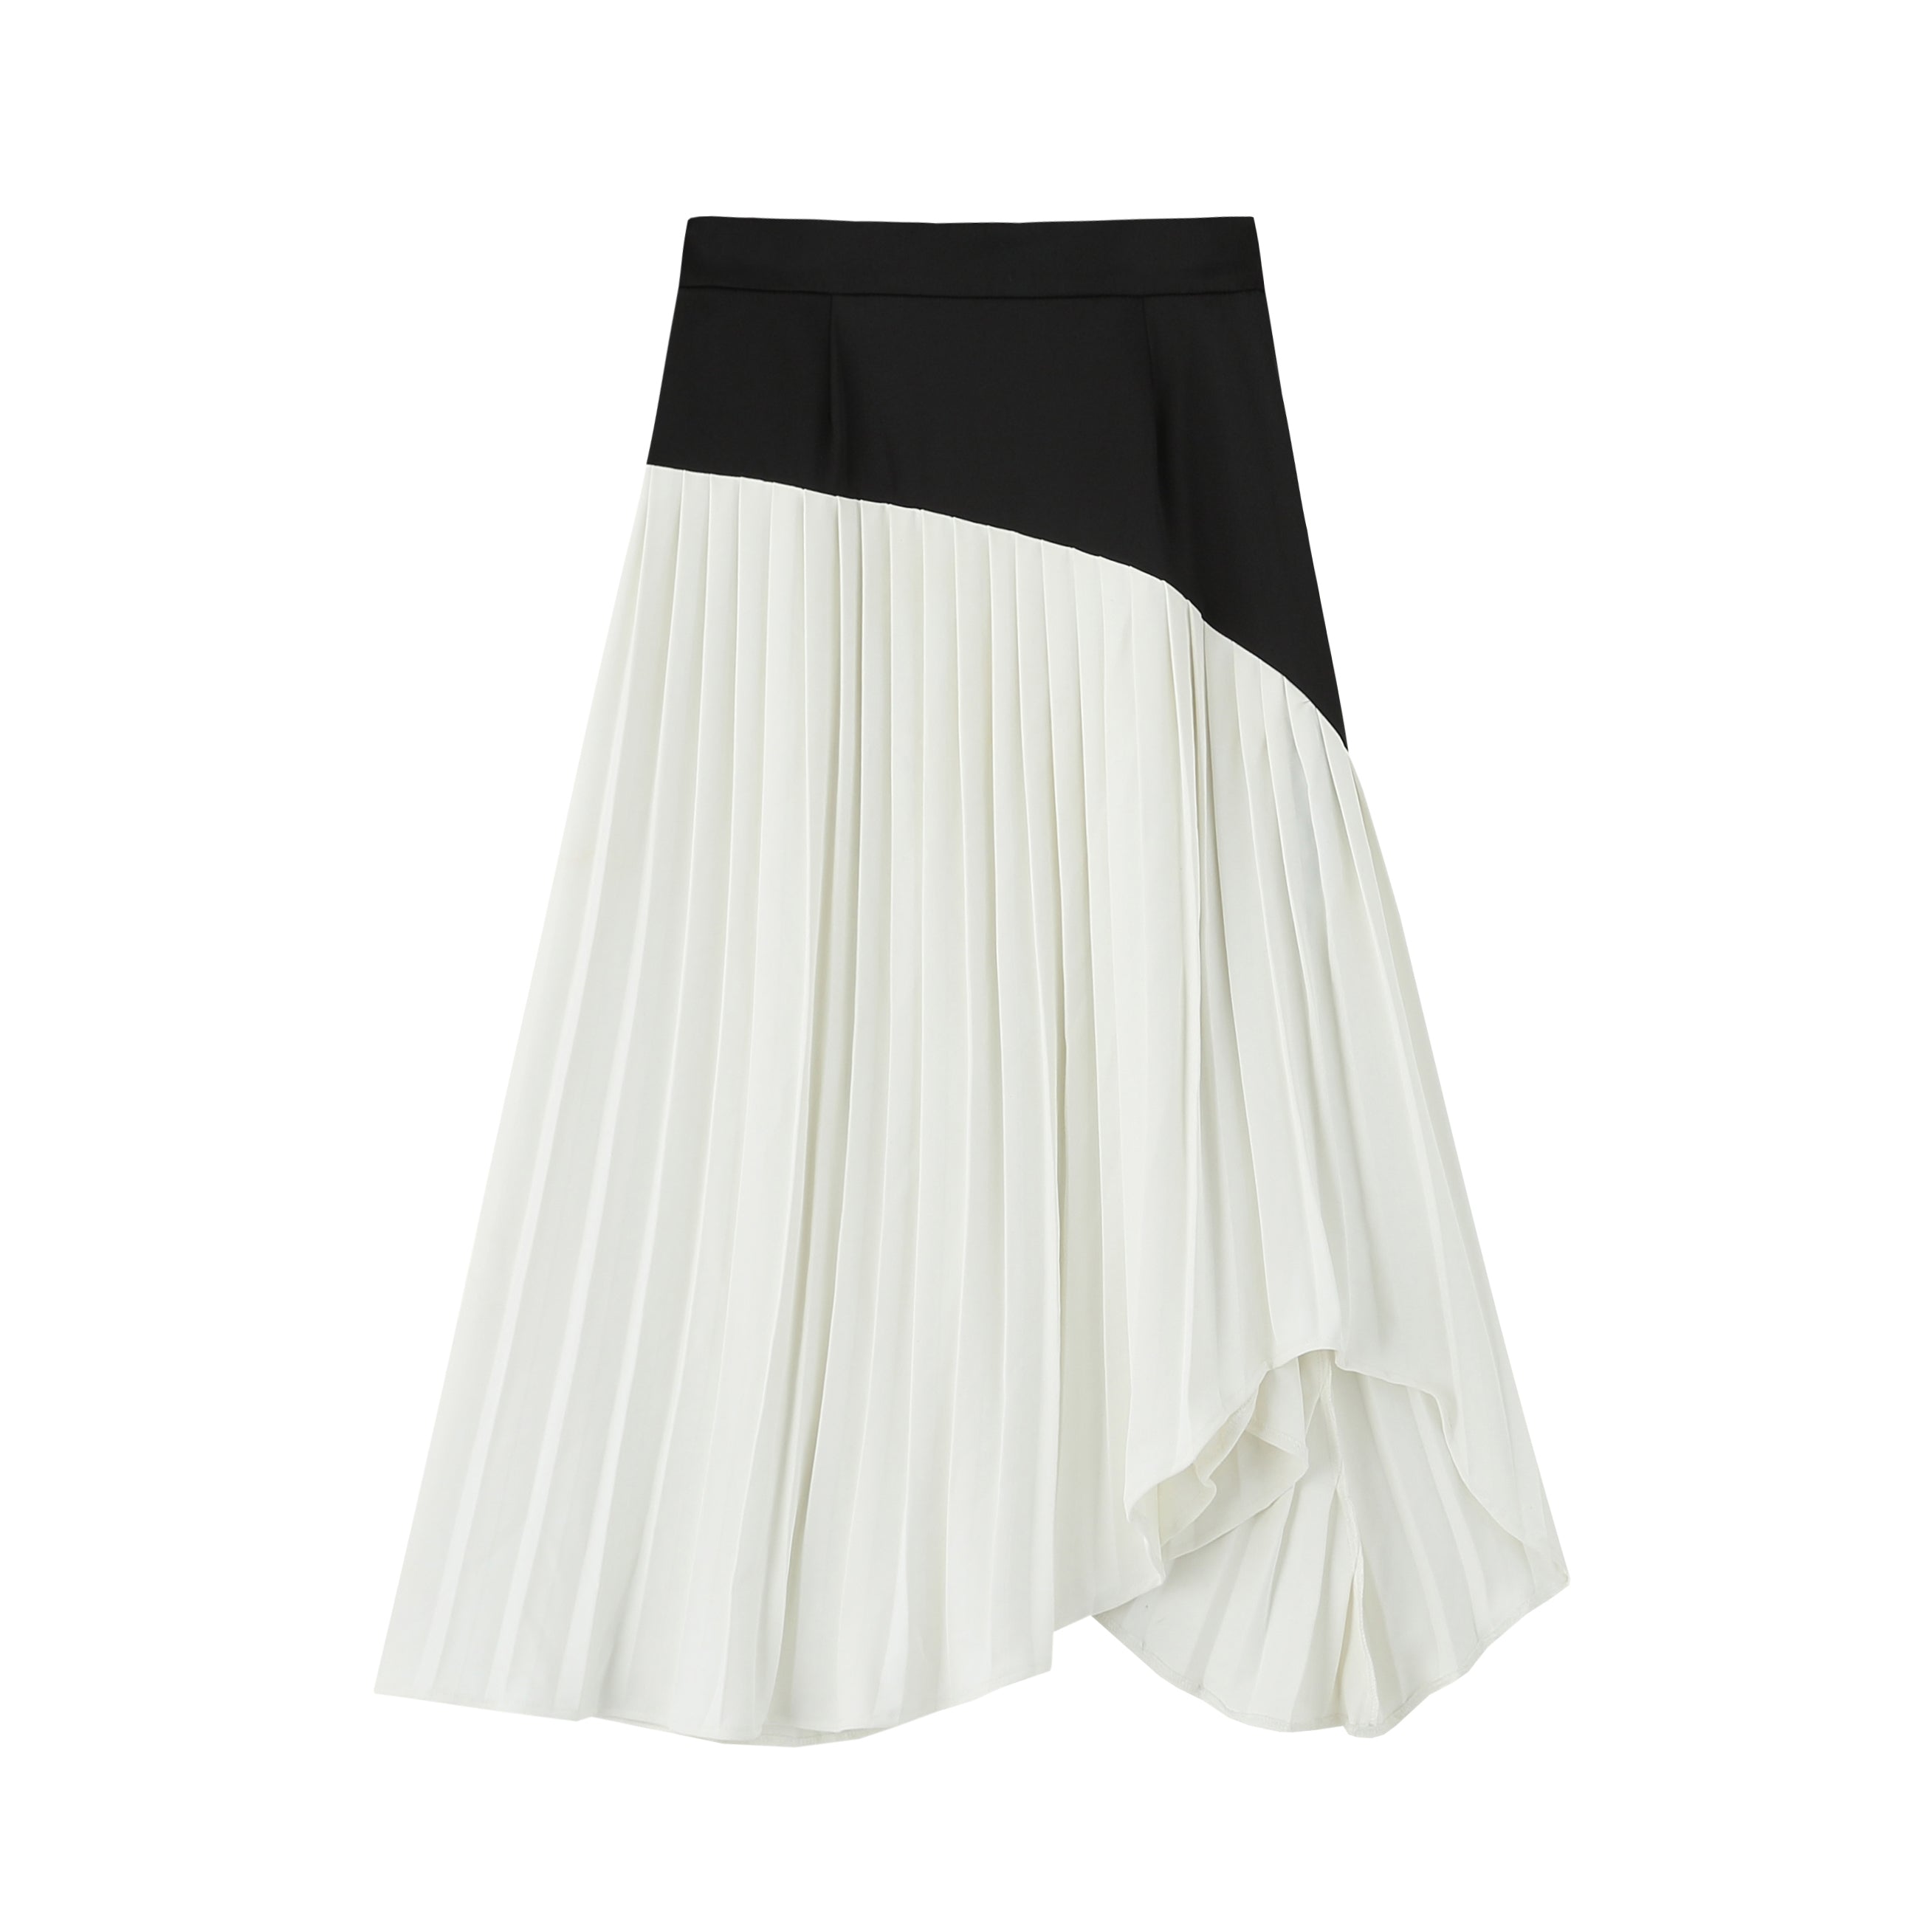 Pleated skirt with irregular stitching